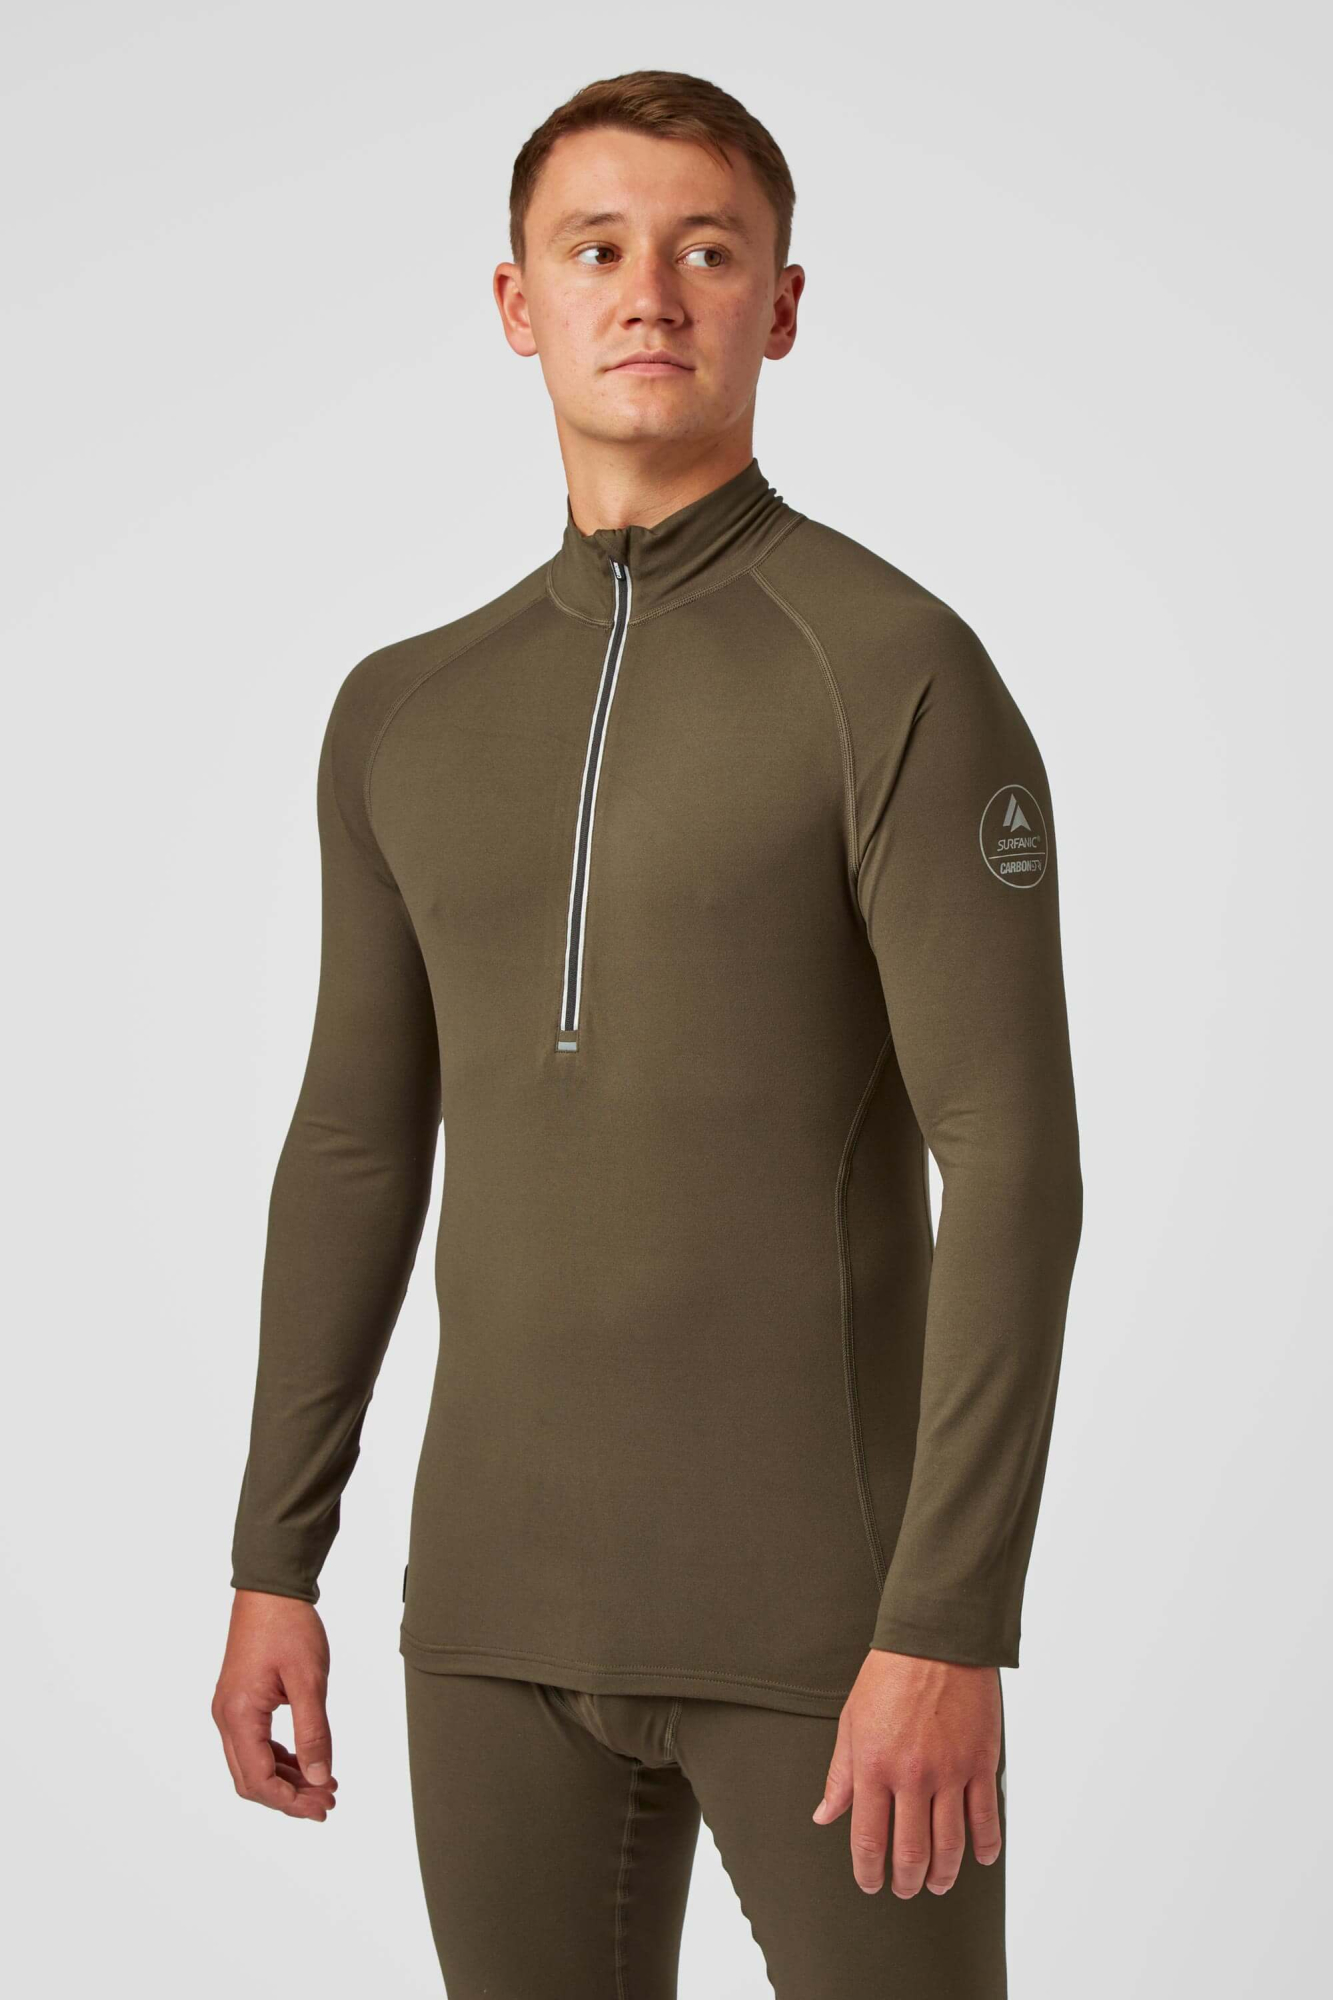 Surfanic Mens Bodyfit Zip Neck Green - Size: Large